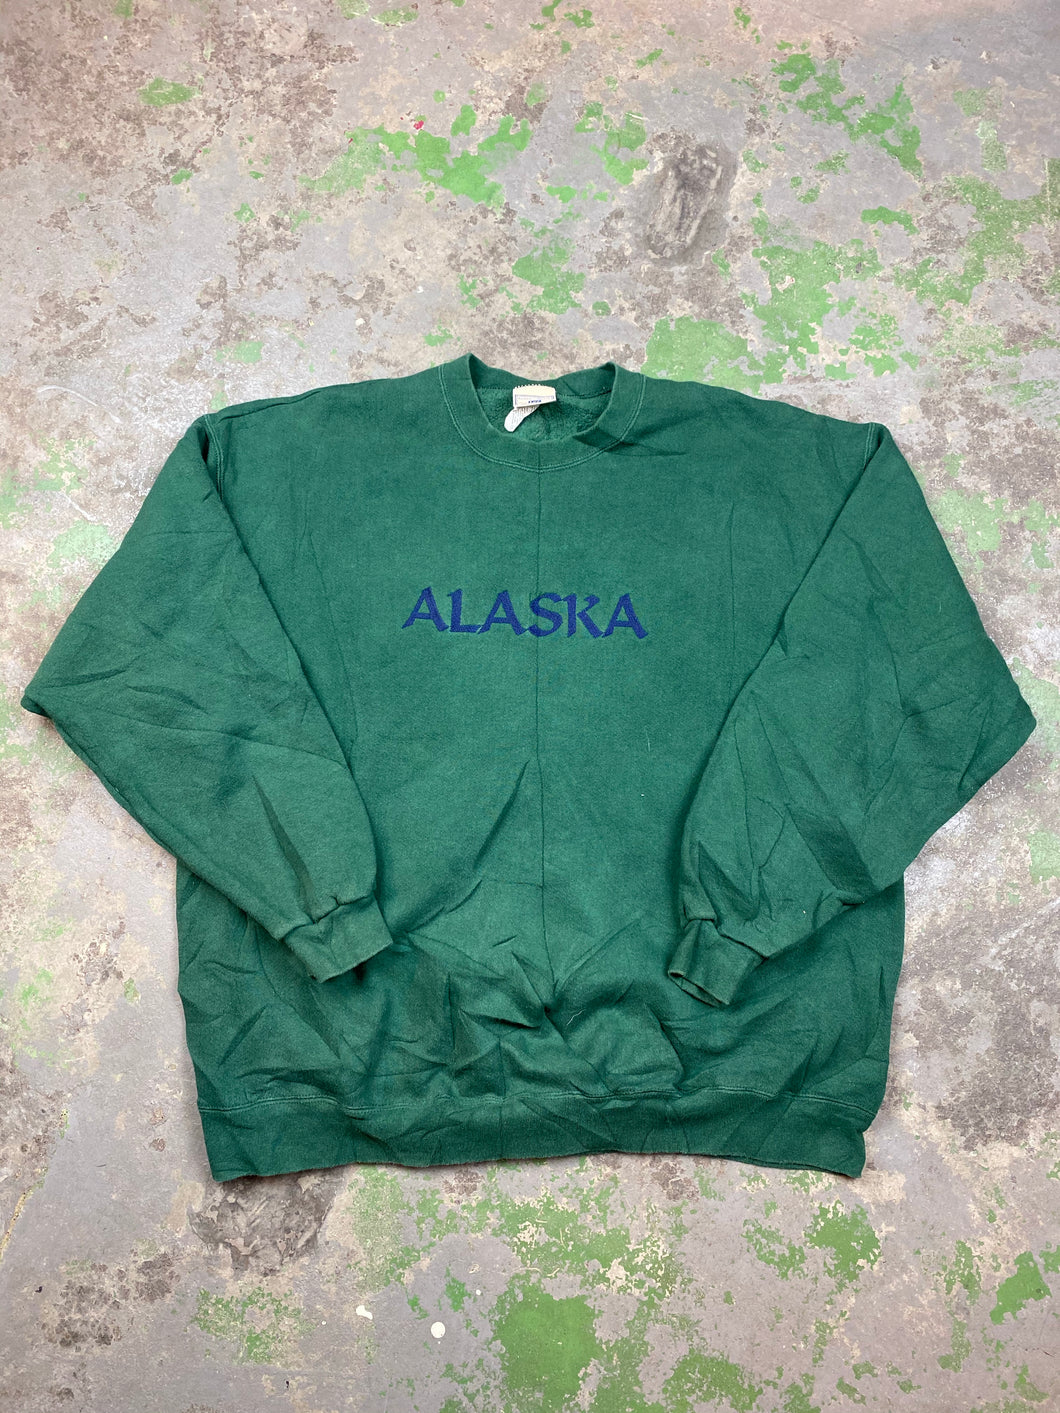 Heavy weight embroidered Alaska crewneck